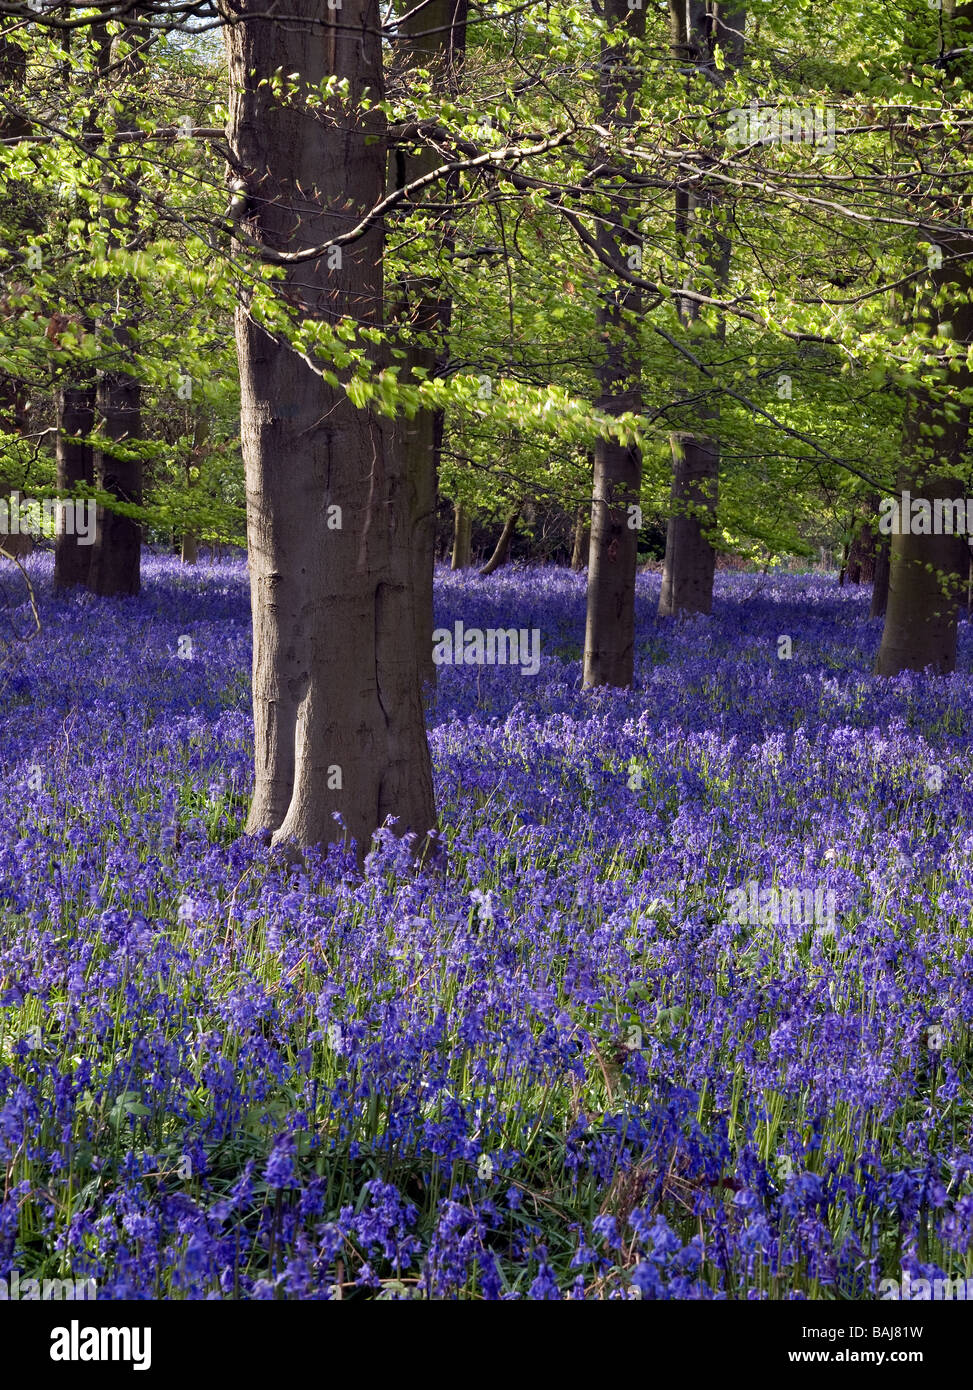 Carpet of English native Bluebells in ancient broadleaf woodland. Stock Photo